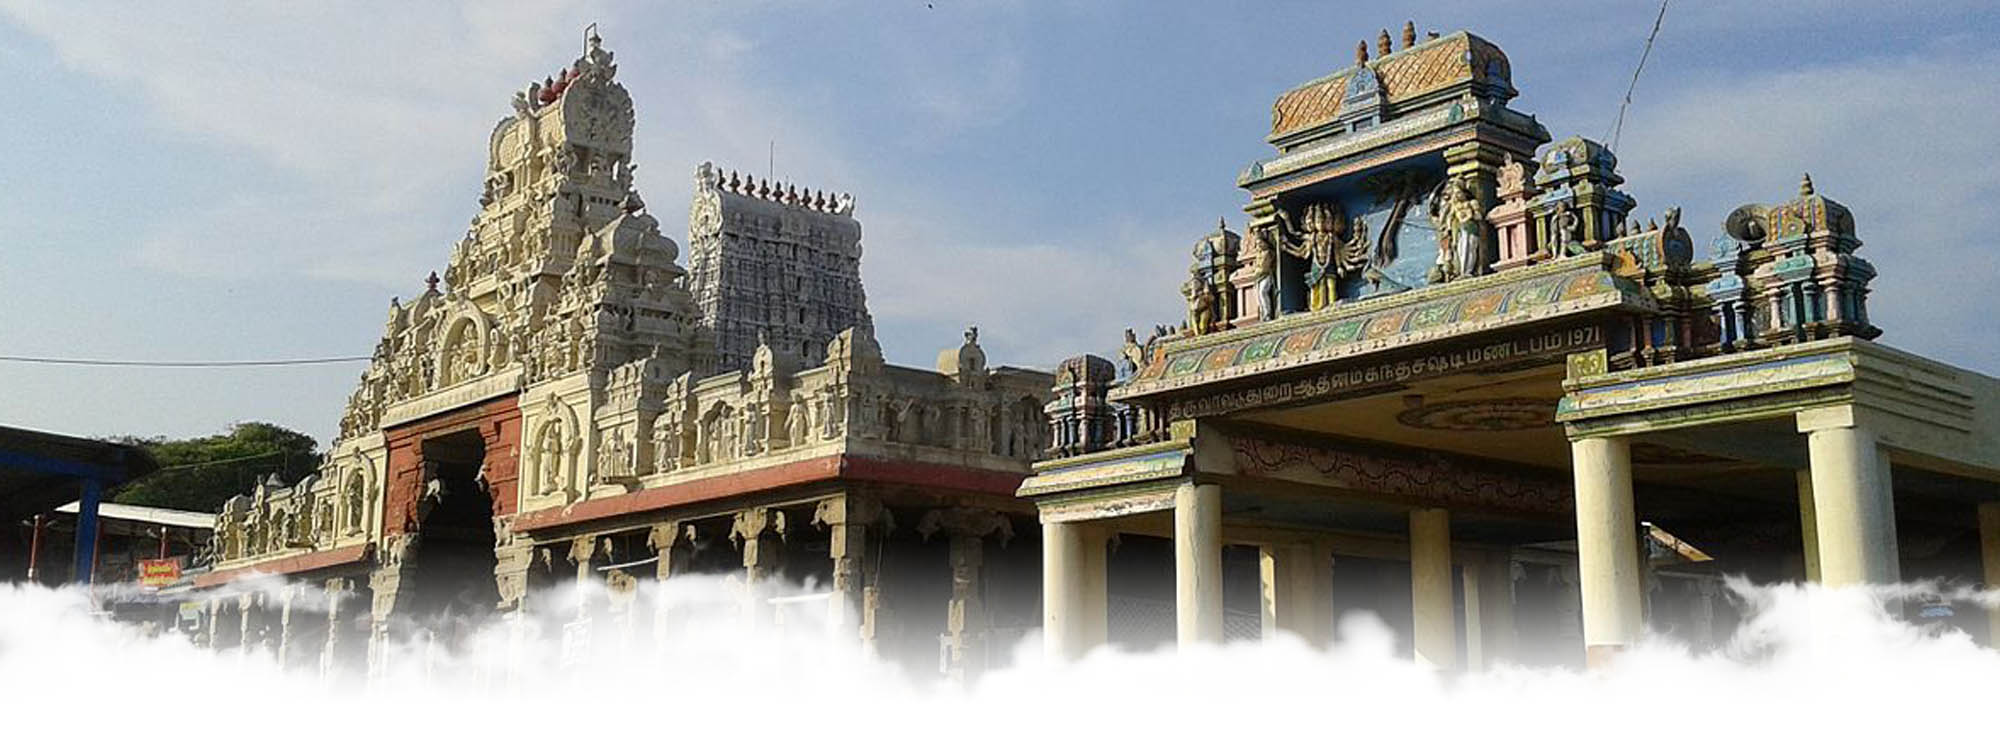 Thiruchendur Murugan Temple - Mystical Temple by the Sea